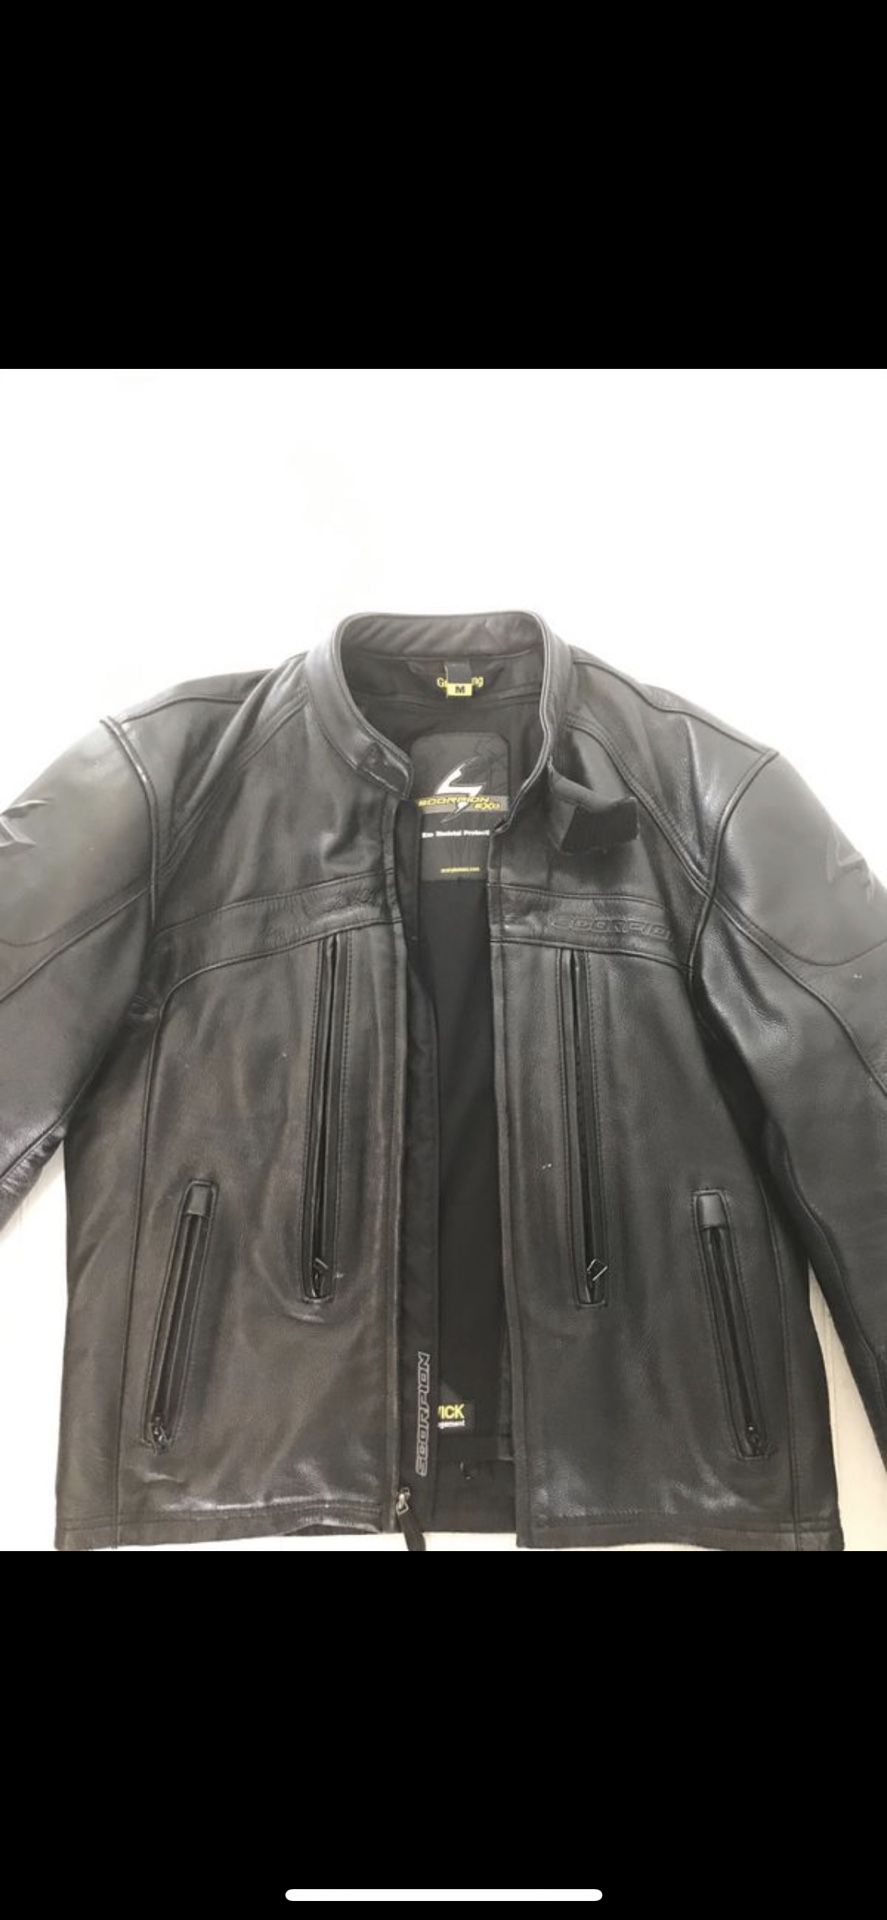 Motorcycle protective leather jacket like new